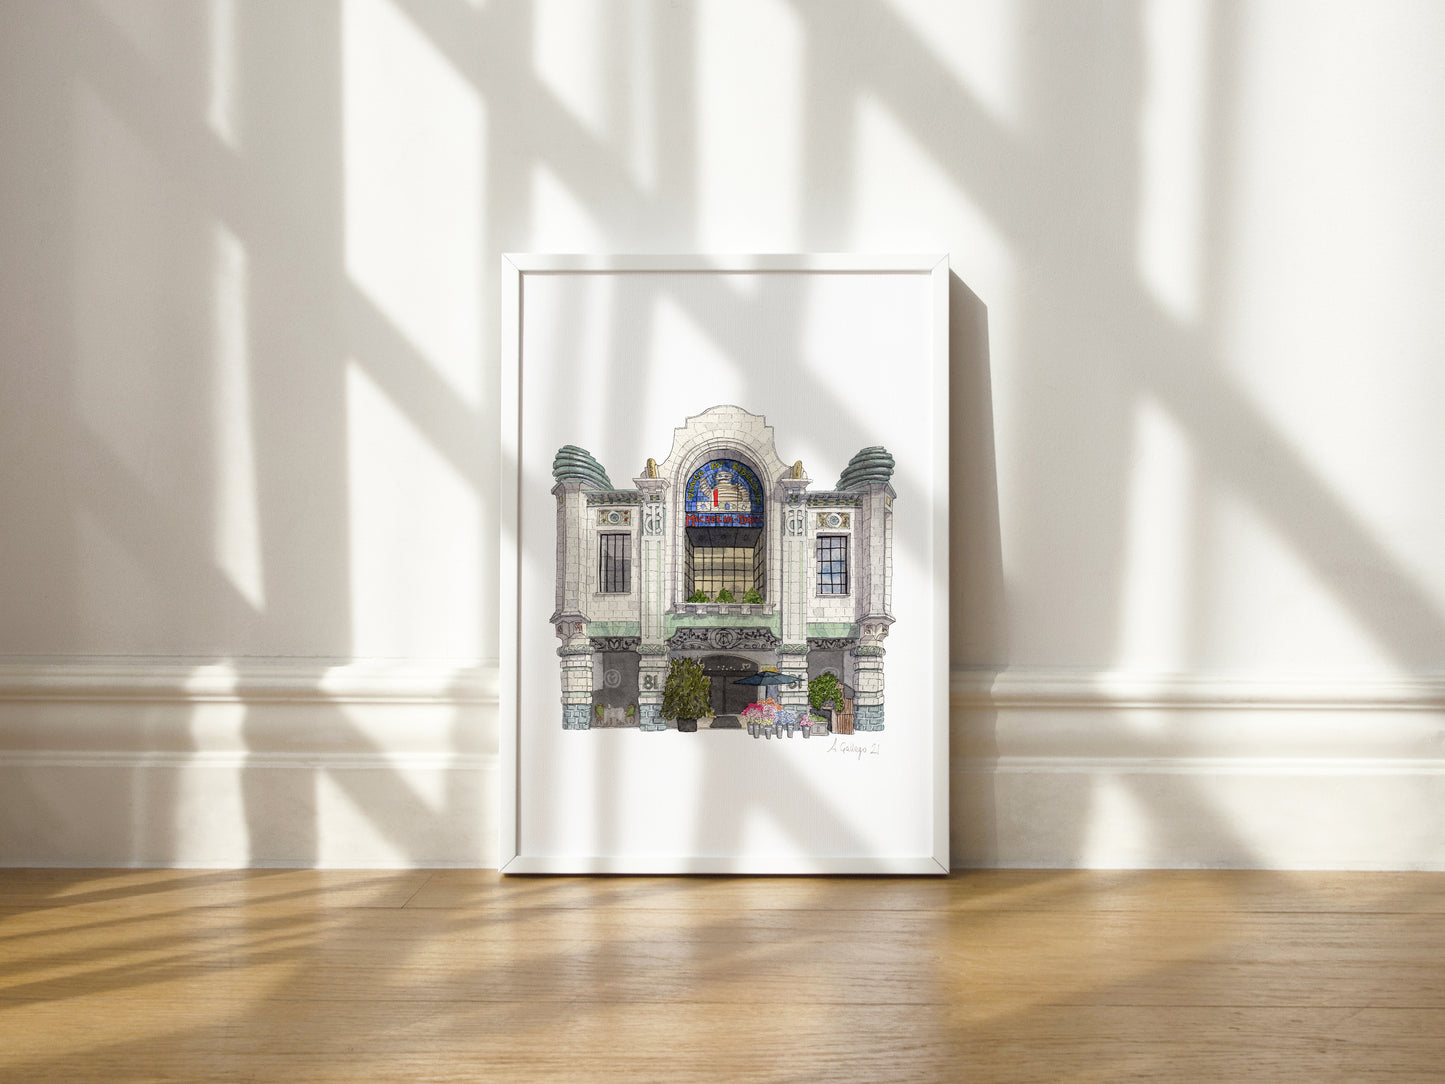 South Kensington - Michelin House - Bibendum building - Giclée Print (unframed)